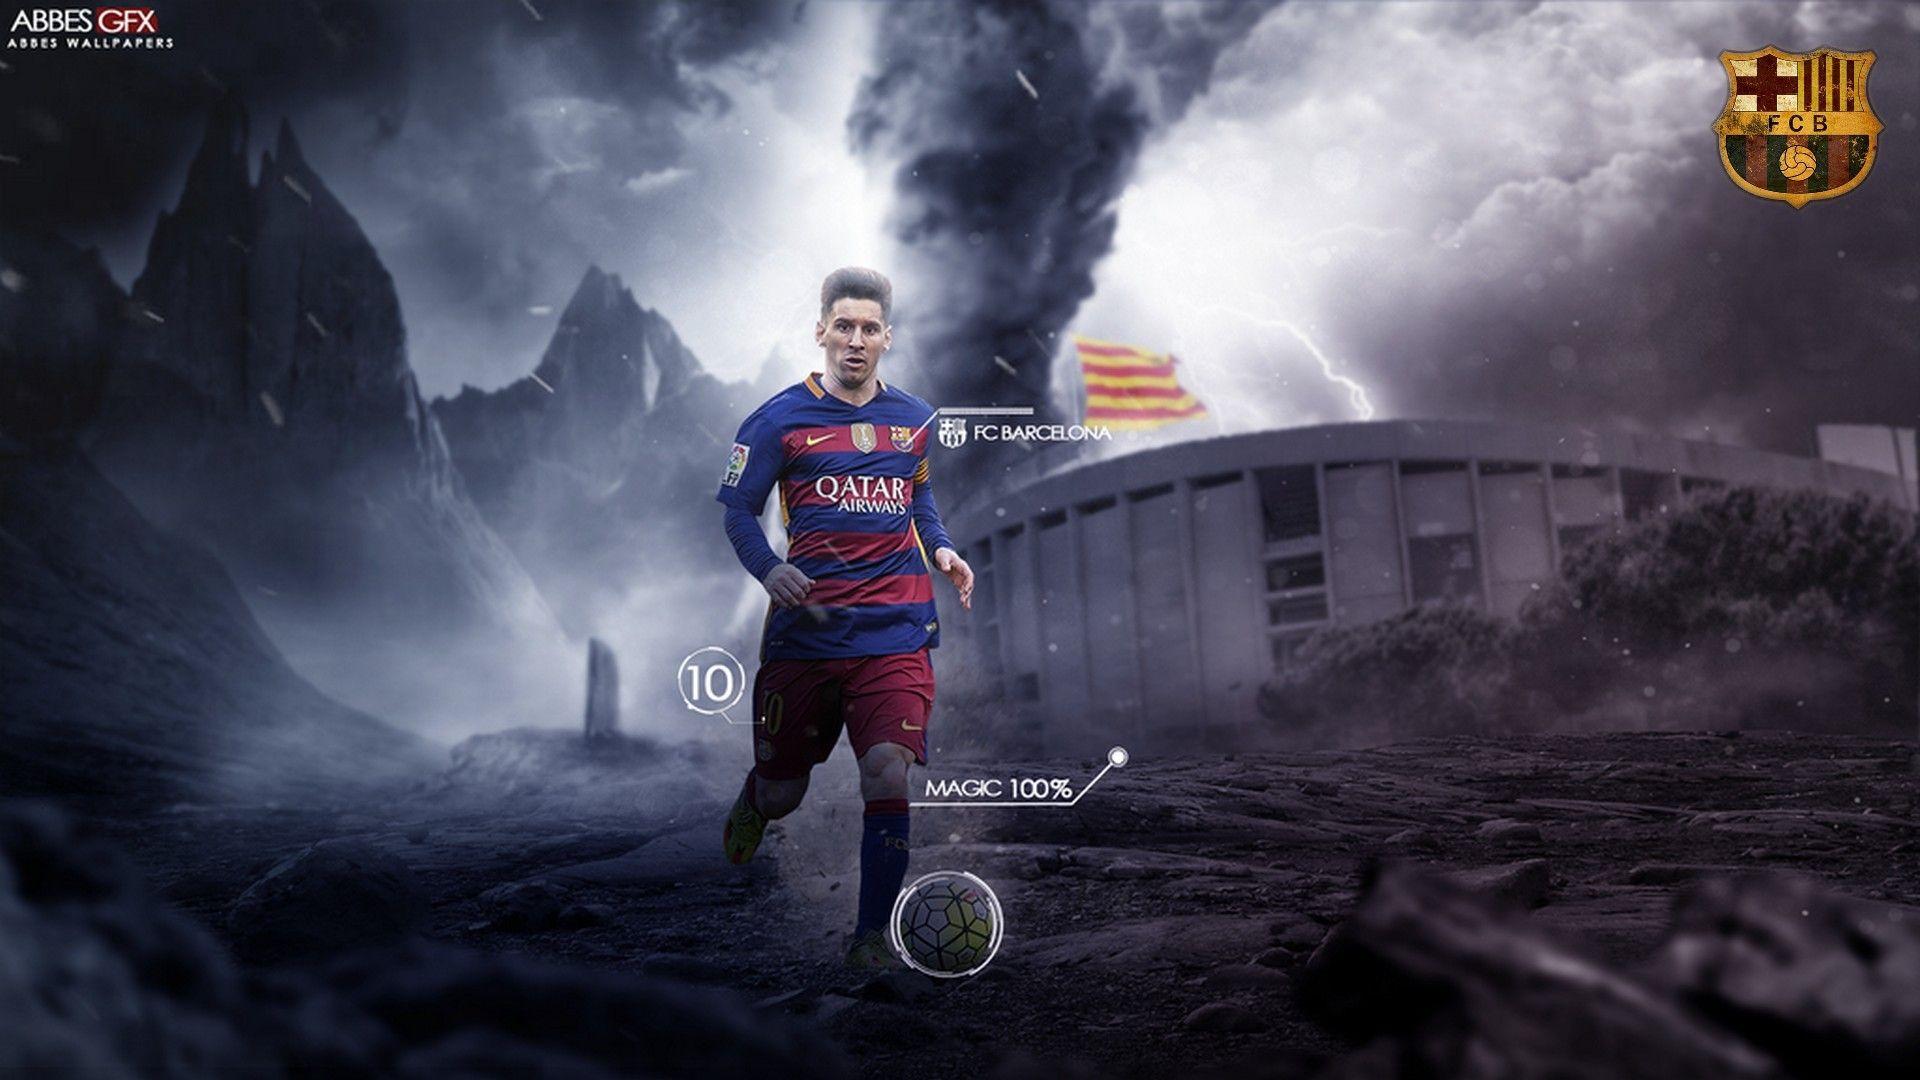 Best Messi HD GIF Images  Mk GIFscom